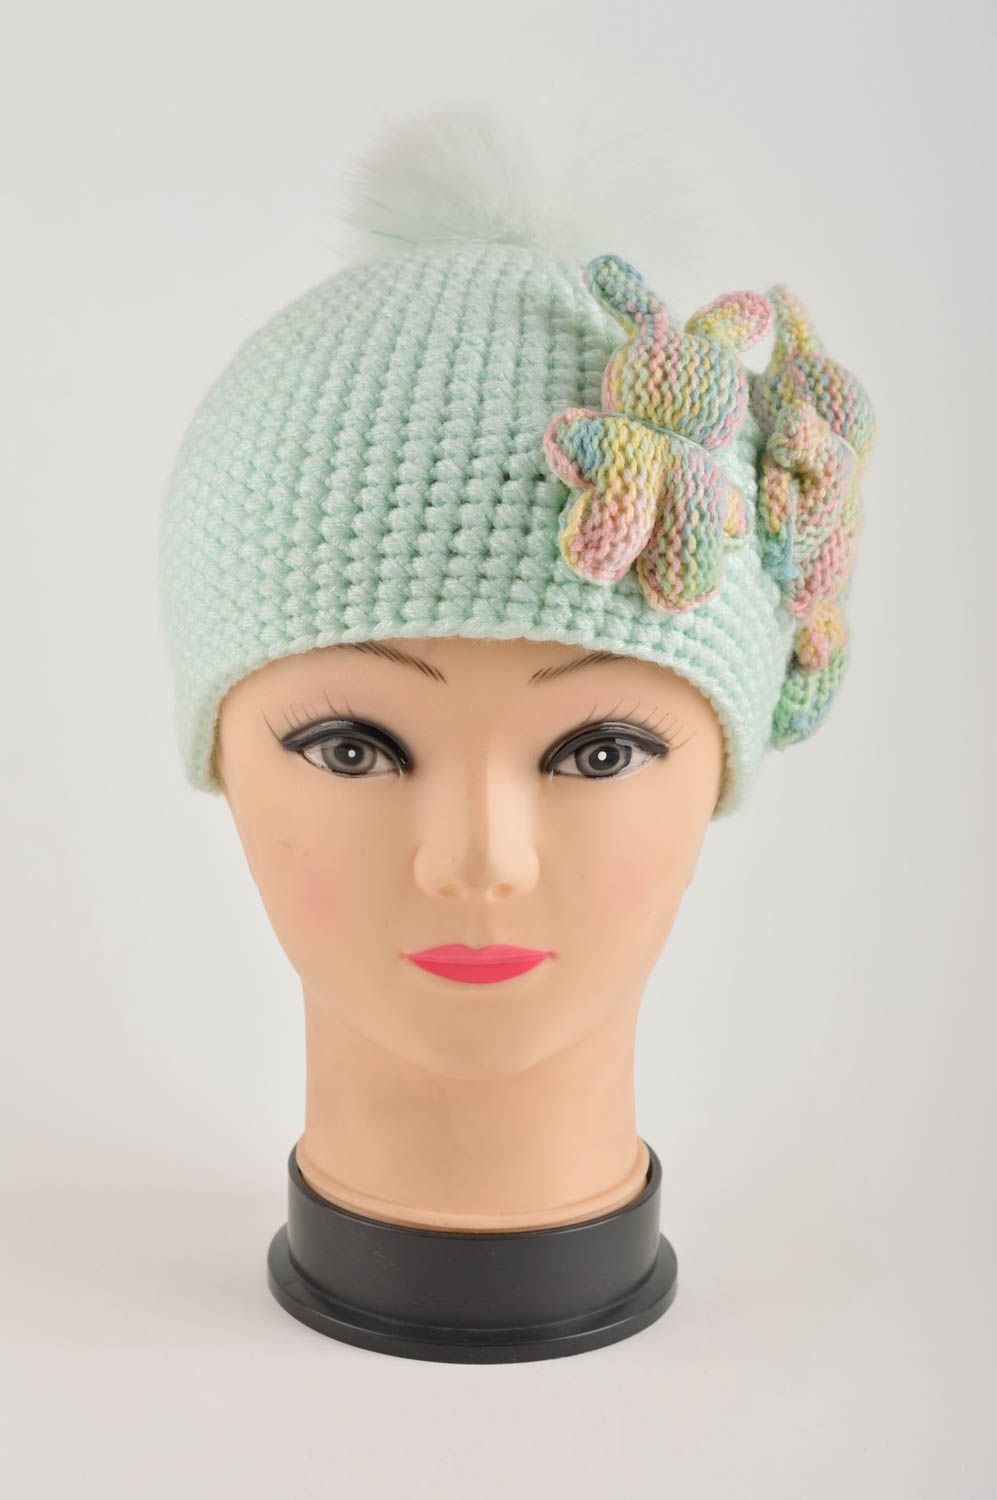 Handmade winter hat warm hat ladies winter hat fashion accessories gifts for her photo 3